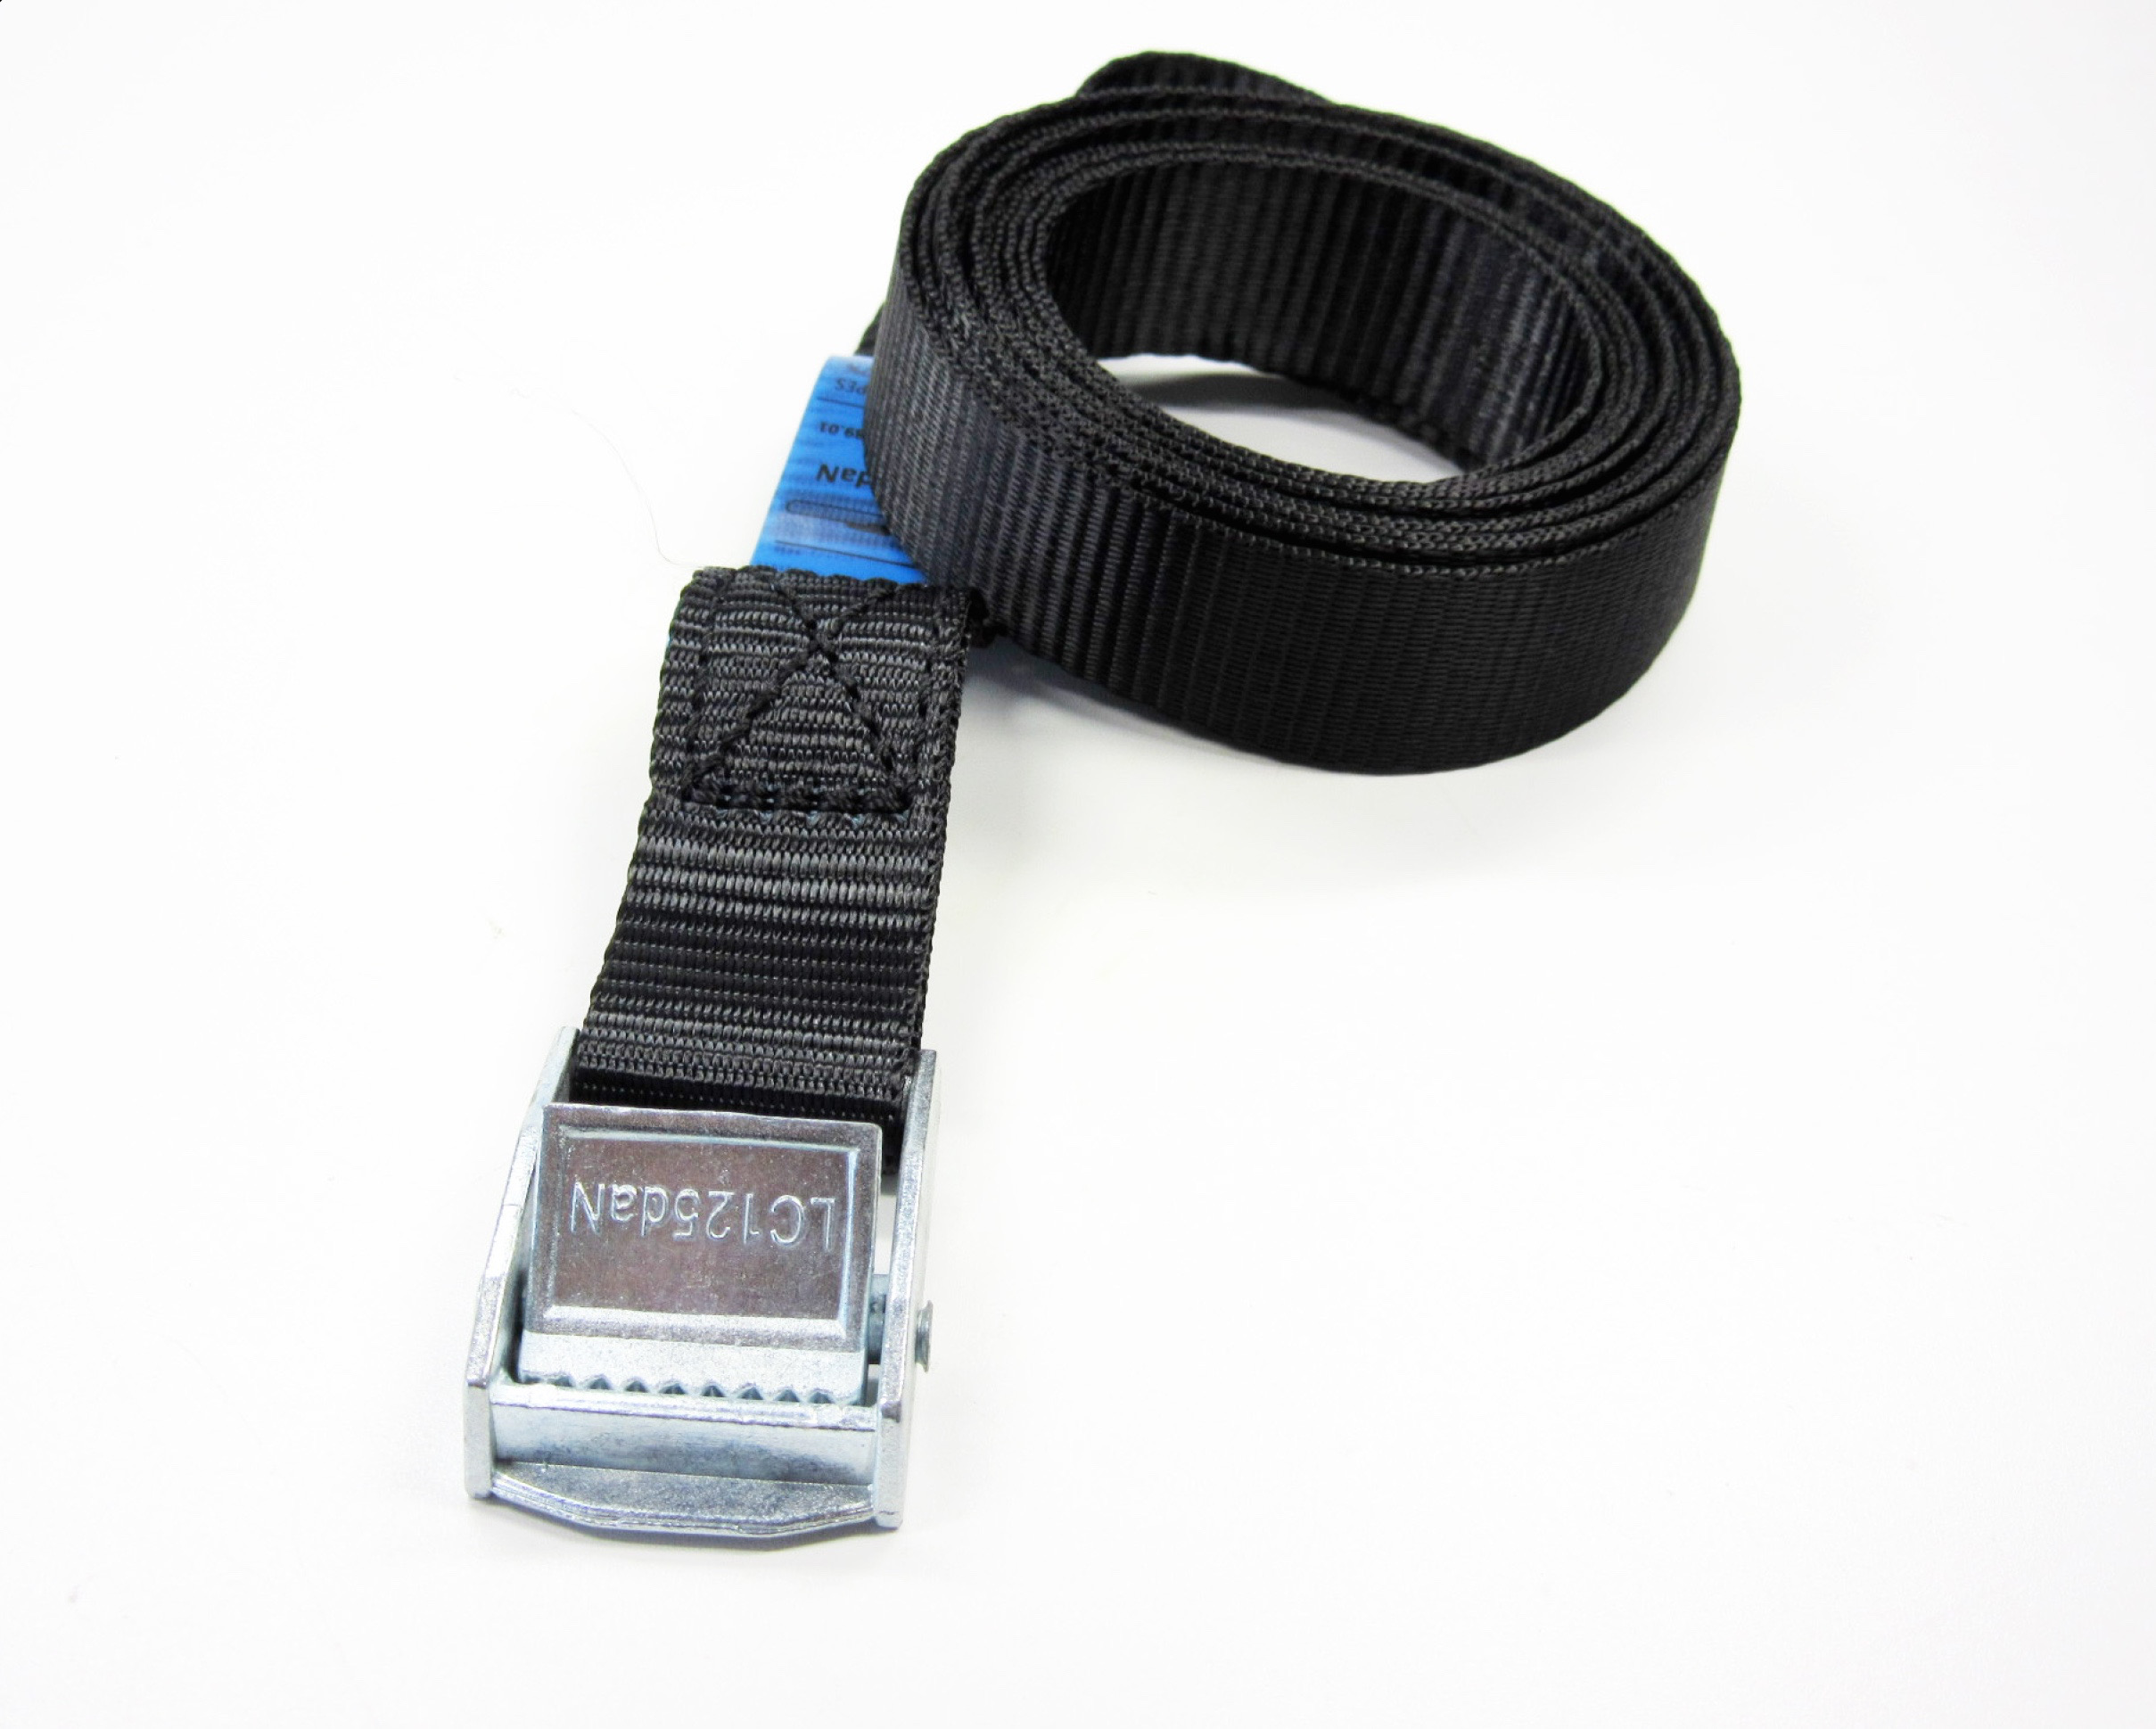 100 stuks Spanband zwart 25 mm 6 meter met klemsluiting